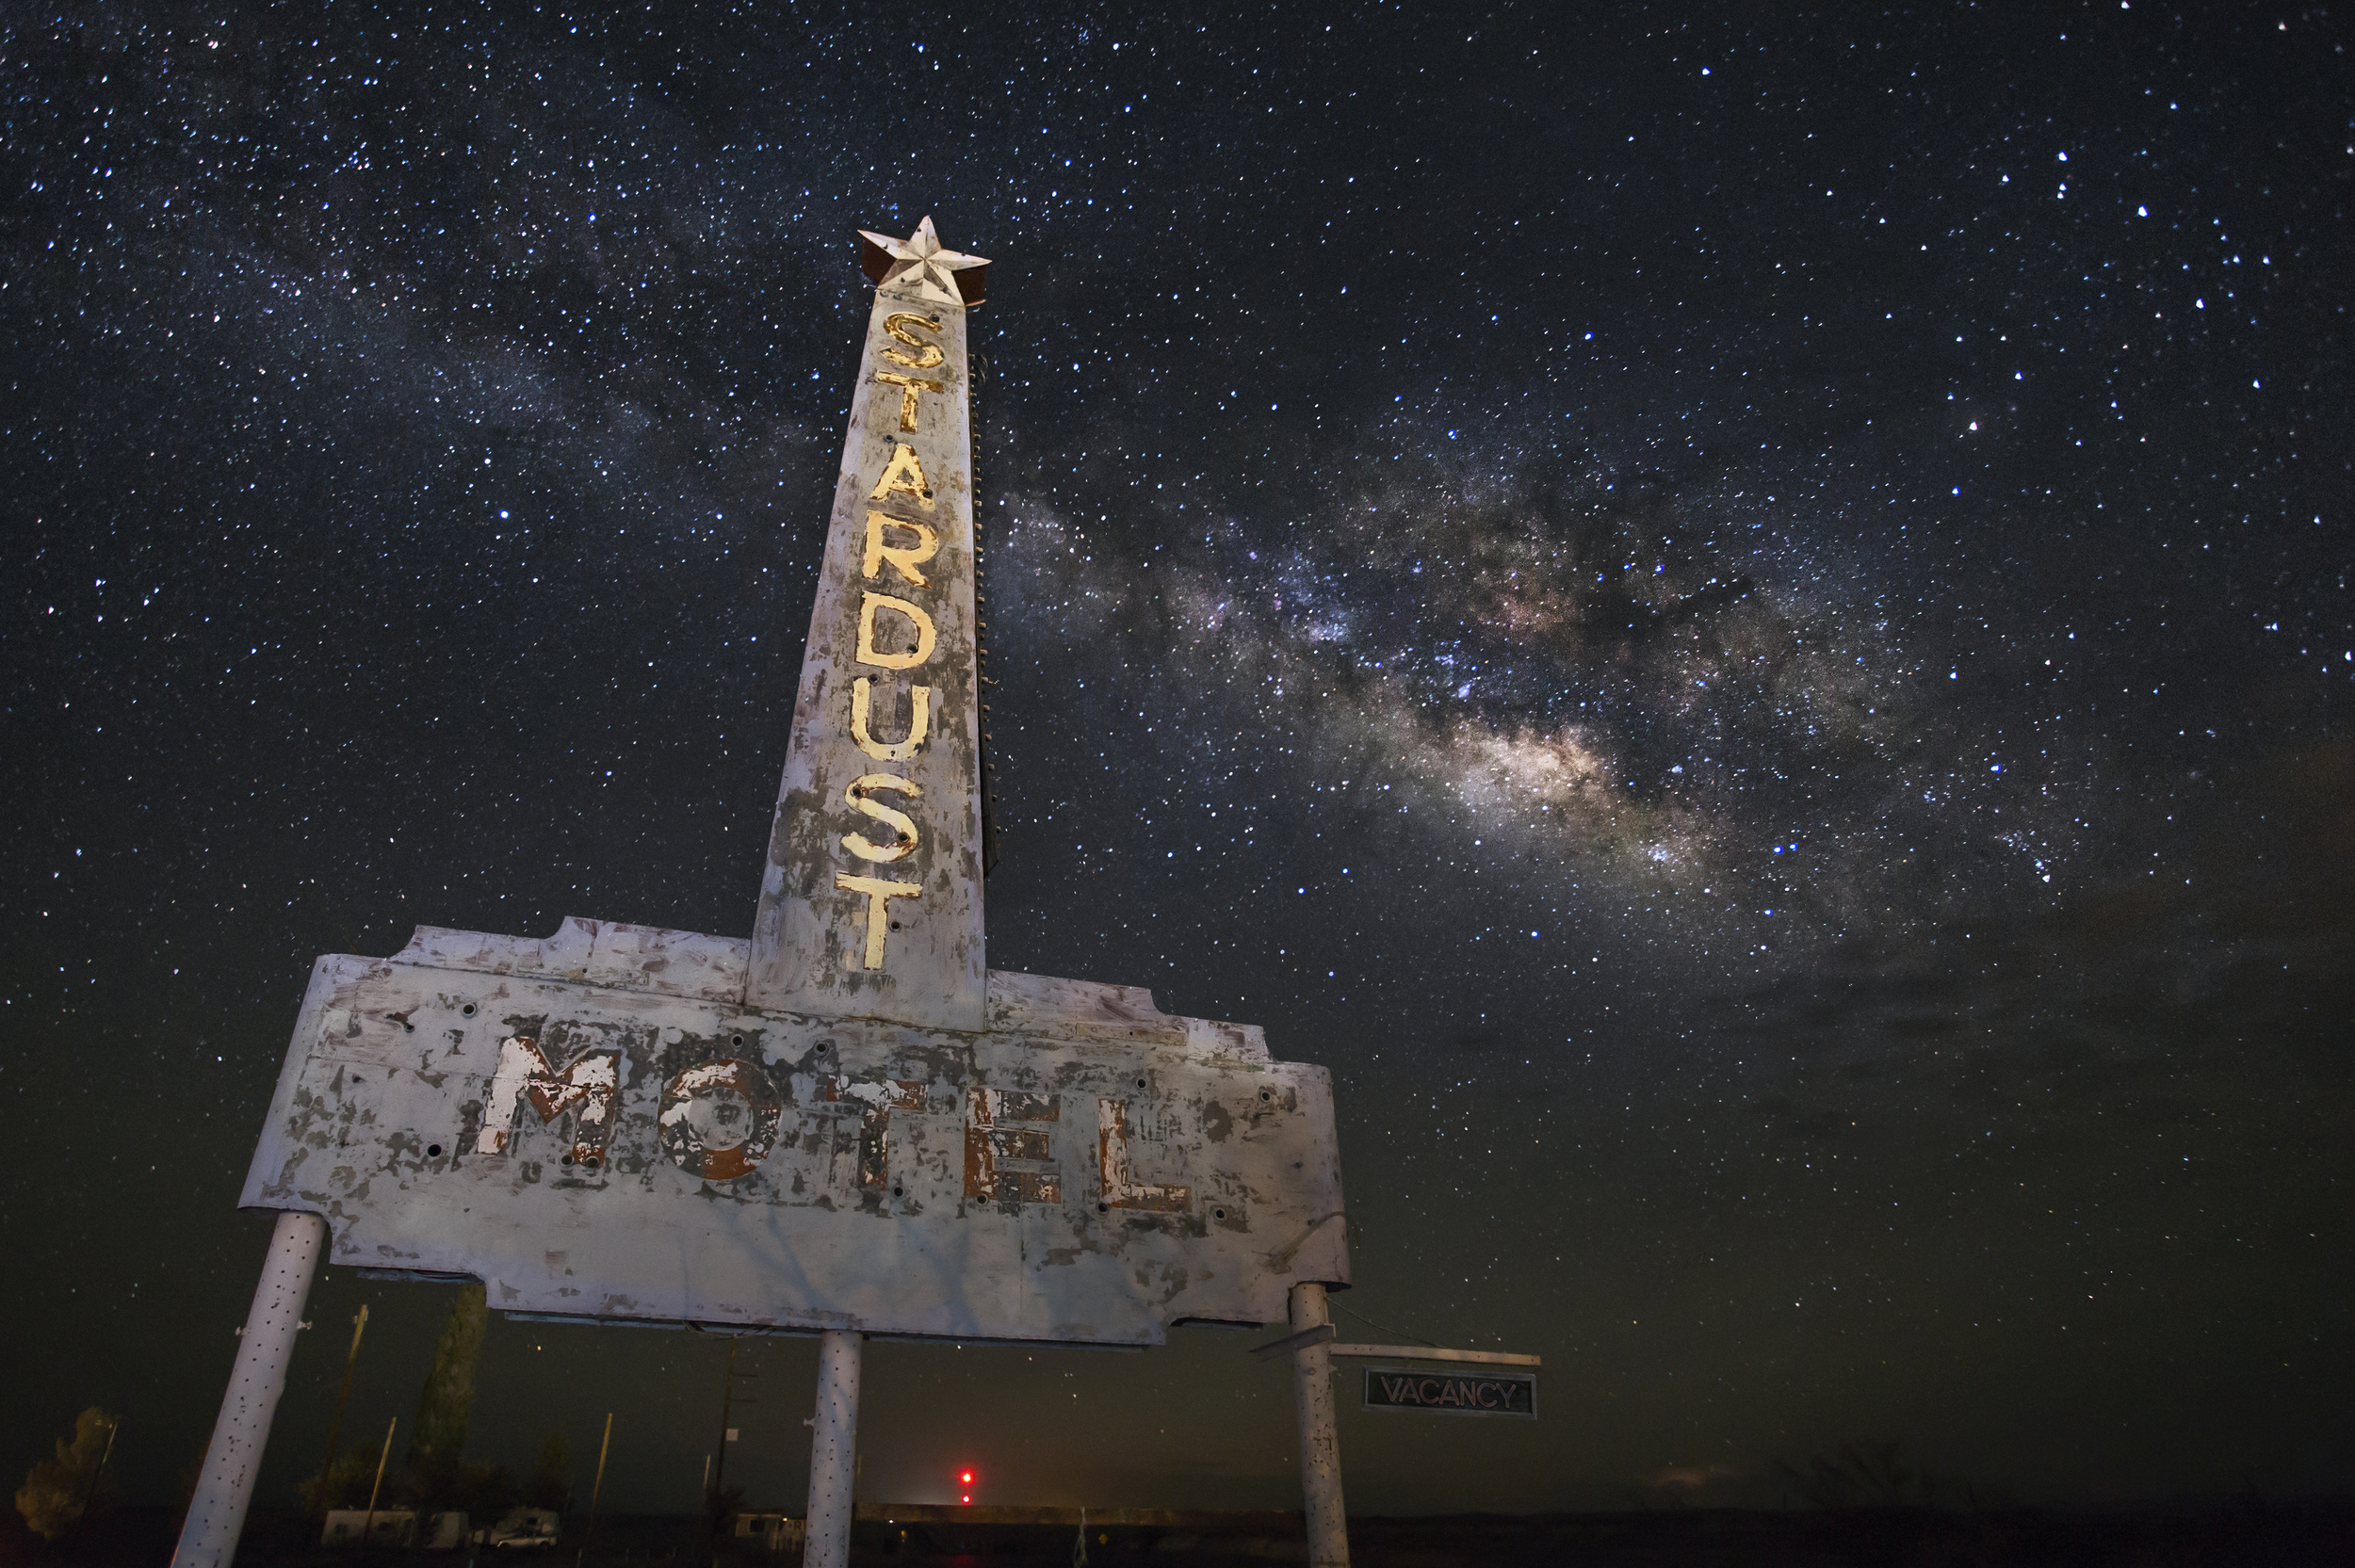  Stardust Motel sign. Marfa, Texas 